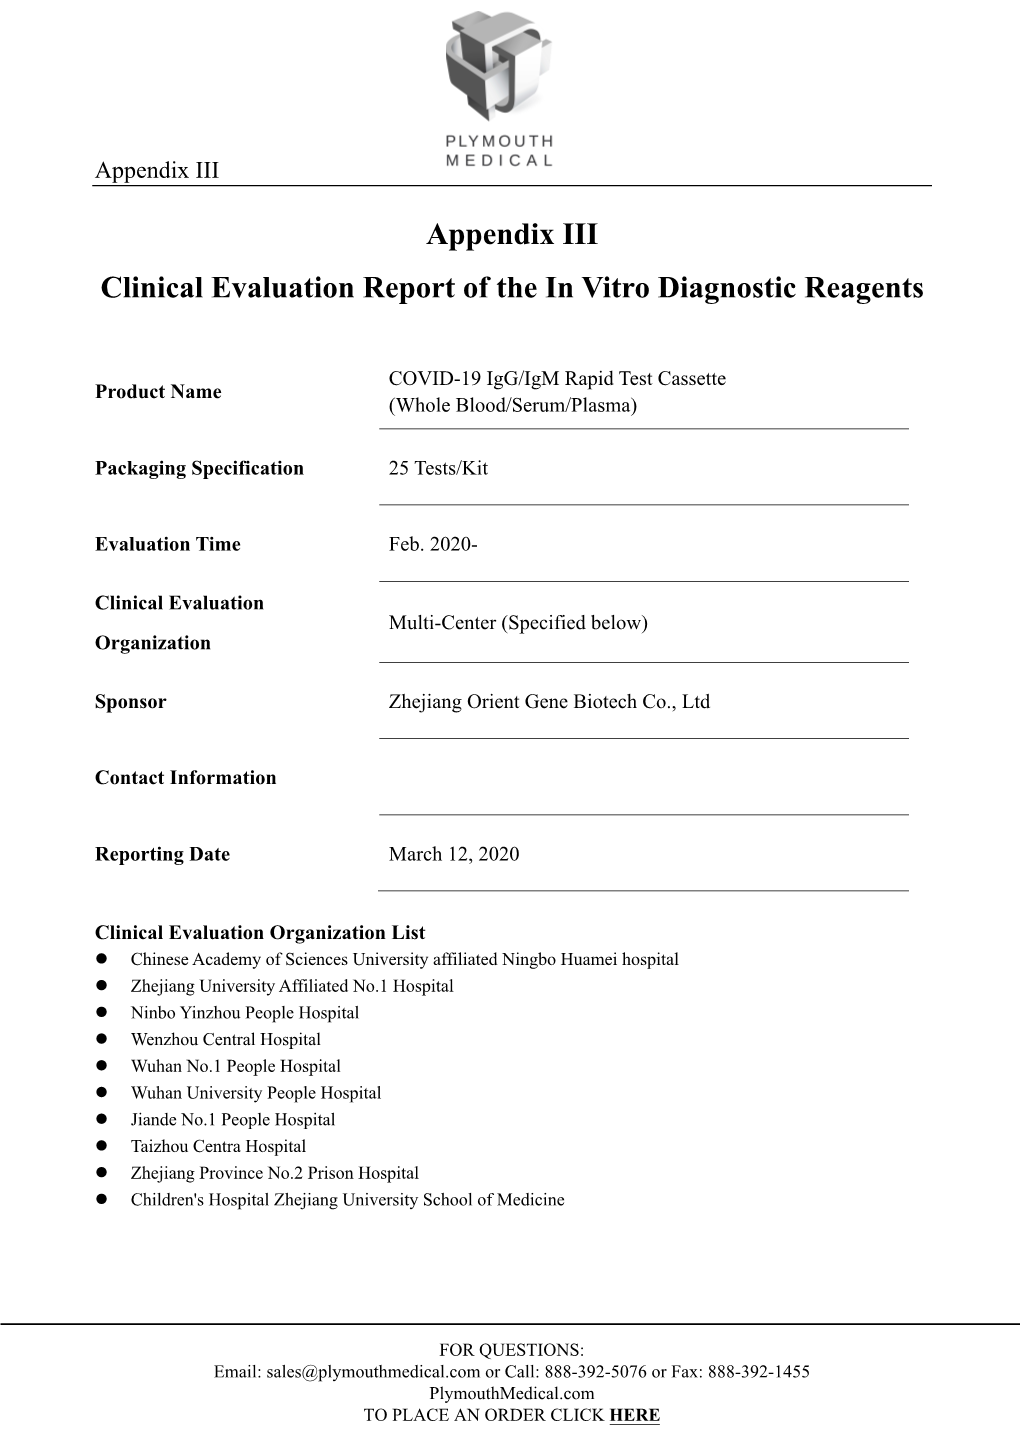 Appendix III Clinical Evaluation Report of the in Vitro Diagnostic Reagents